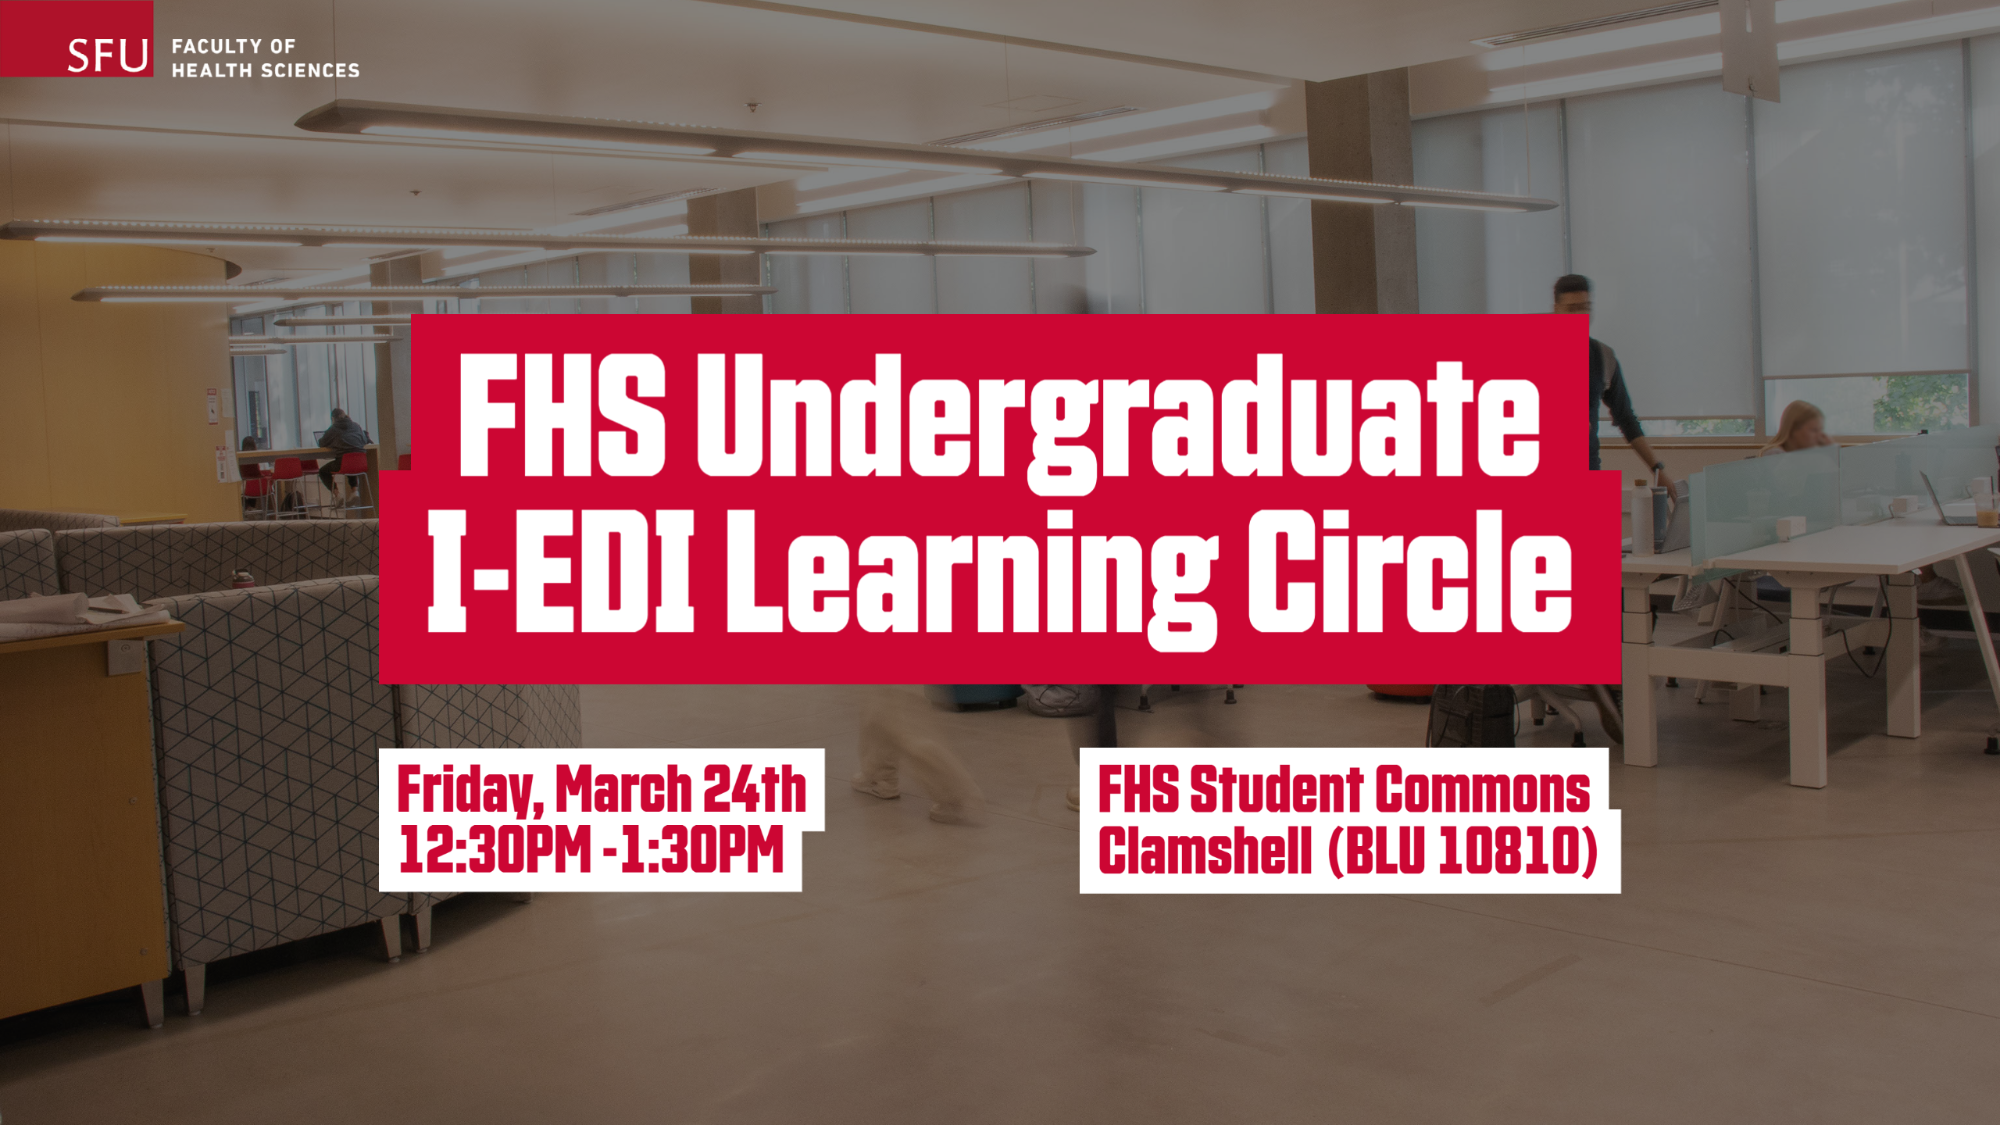 Friday, March 24: FHS Undergraduate I-EDI Learning Circlen